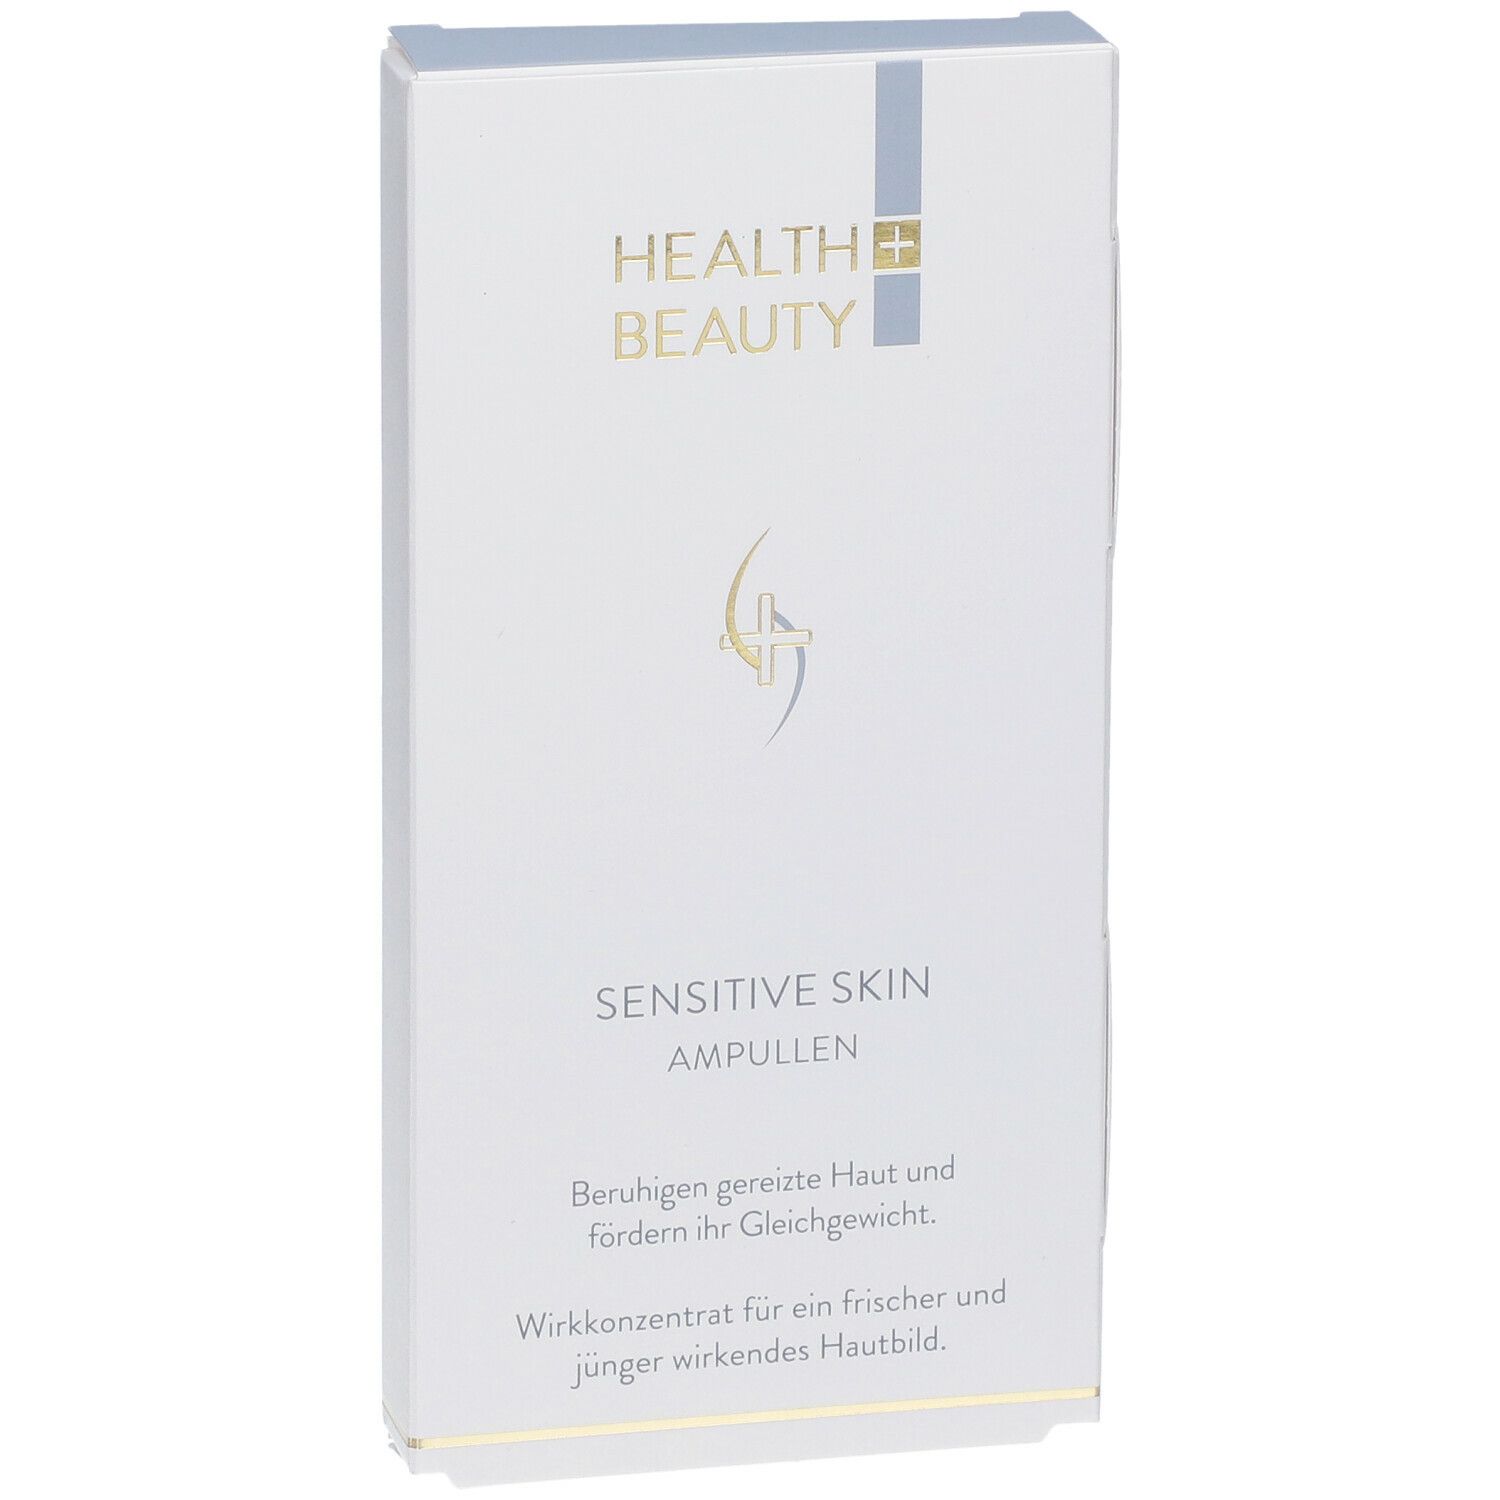 Health & Beauty Sensitive Skin Ampullen